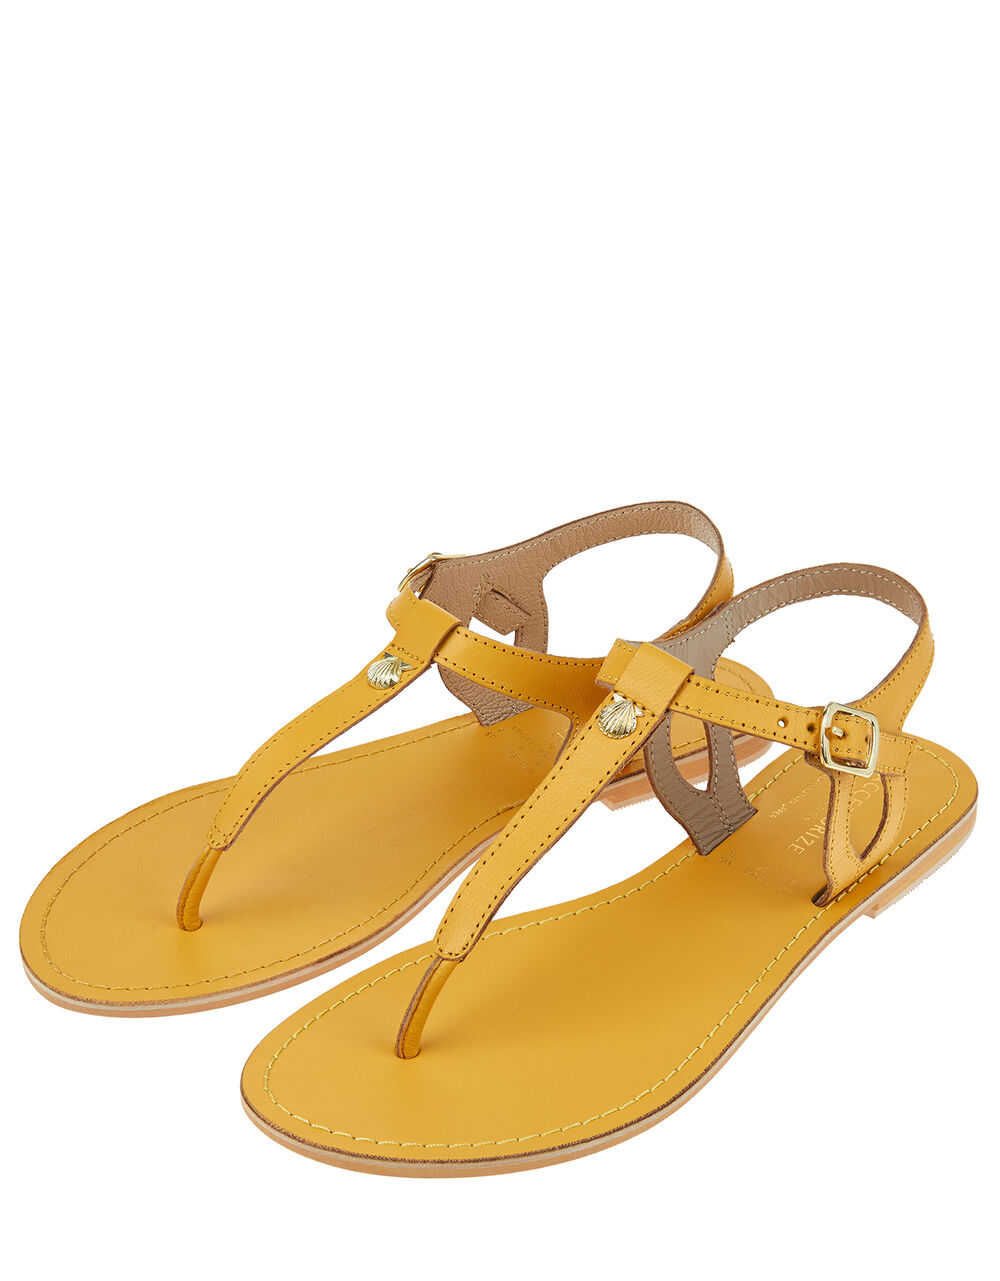 Seashell Charm Leather Sandals Yellow | Sandals & Flip Flops ...